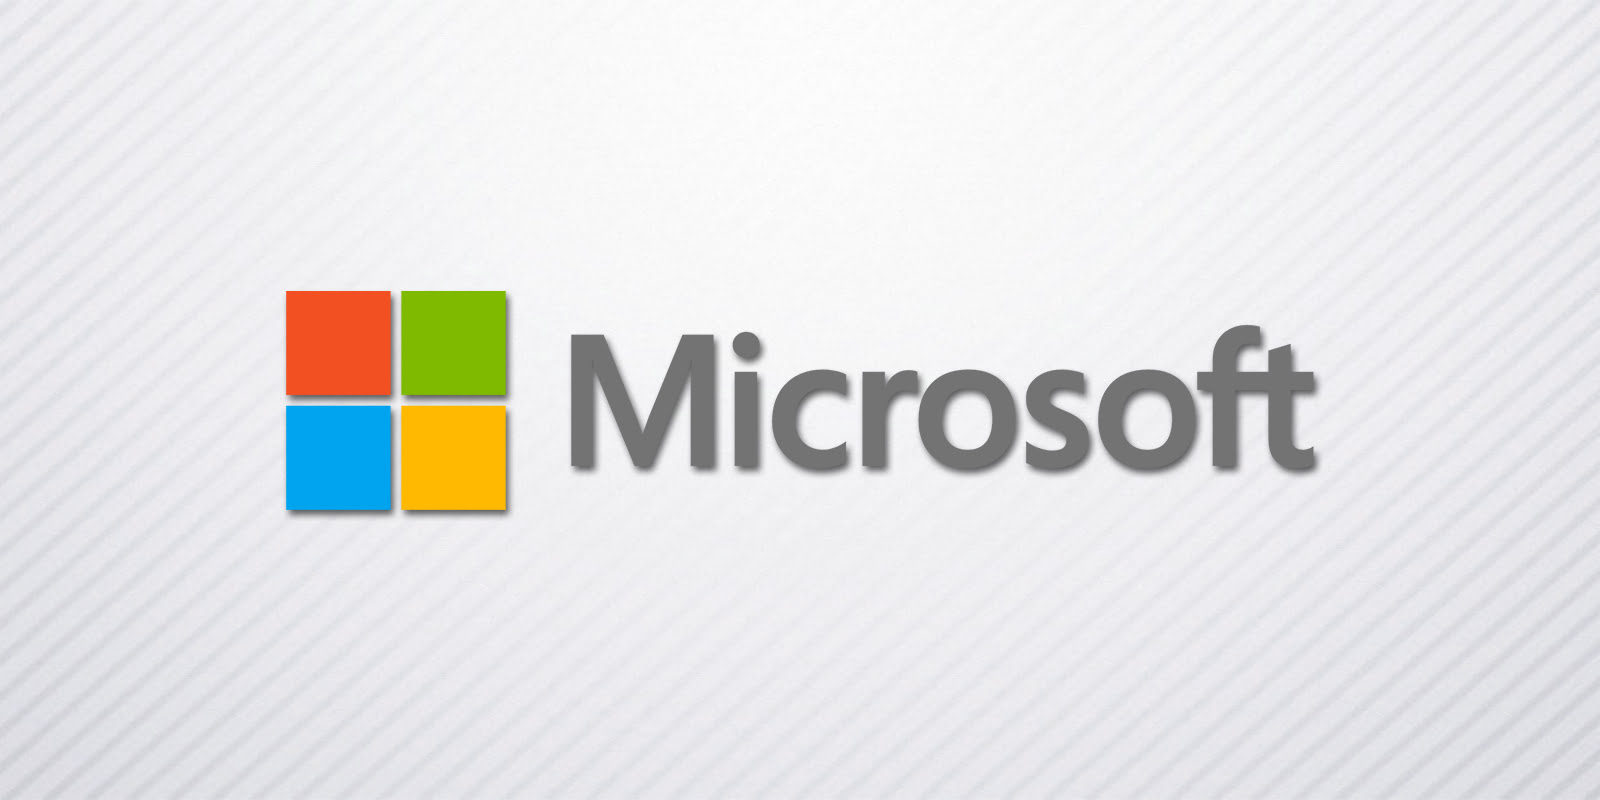 Microsoft Employees To Get $1,500 As A “Pandemic Bonus”